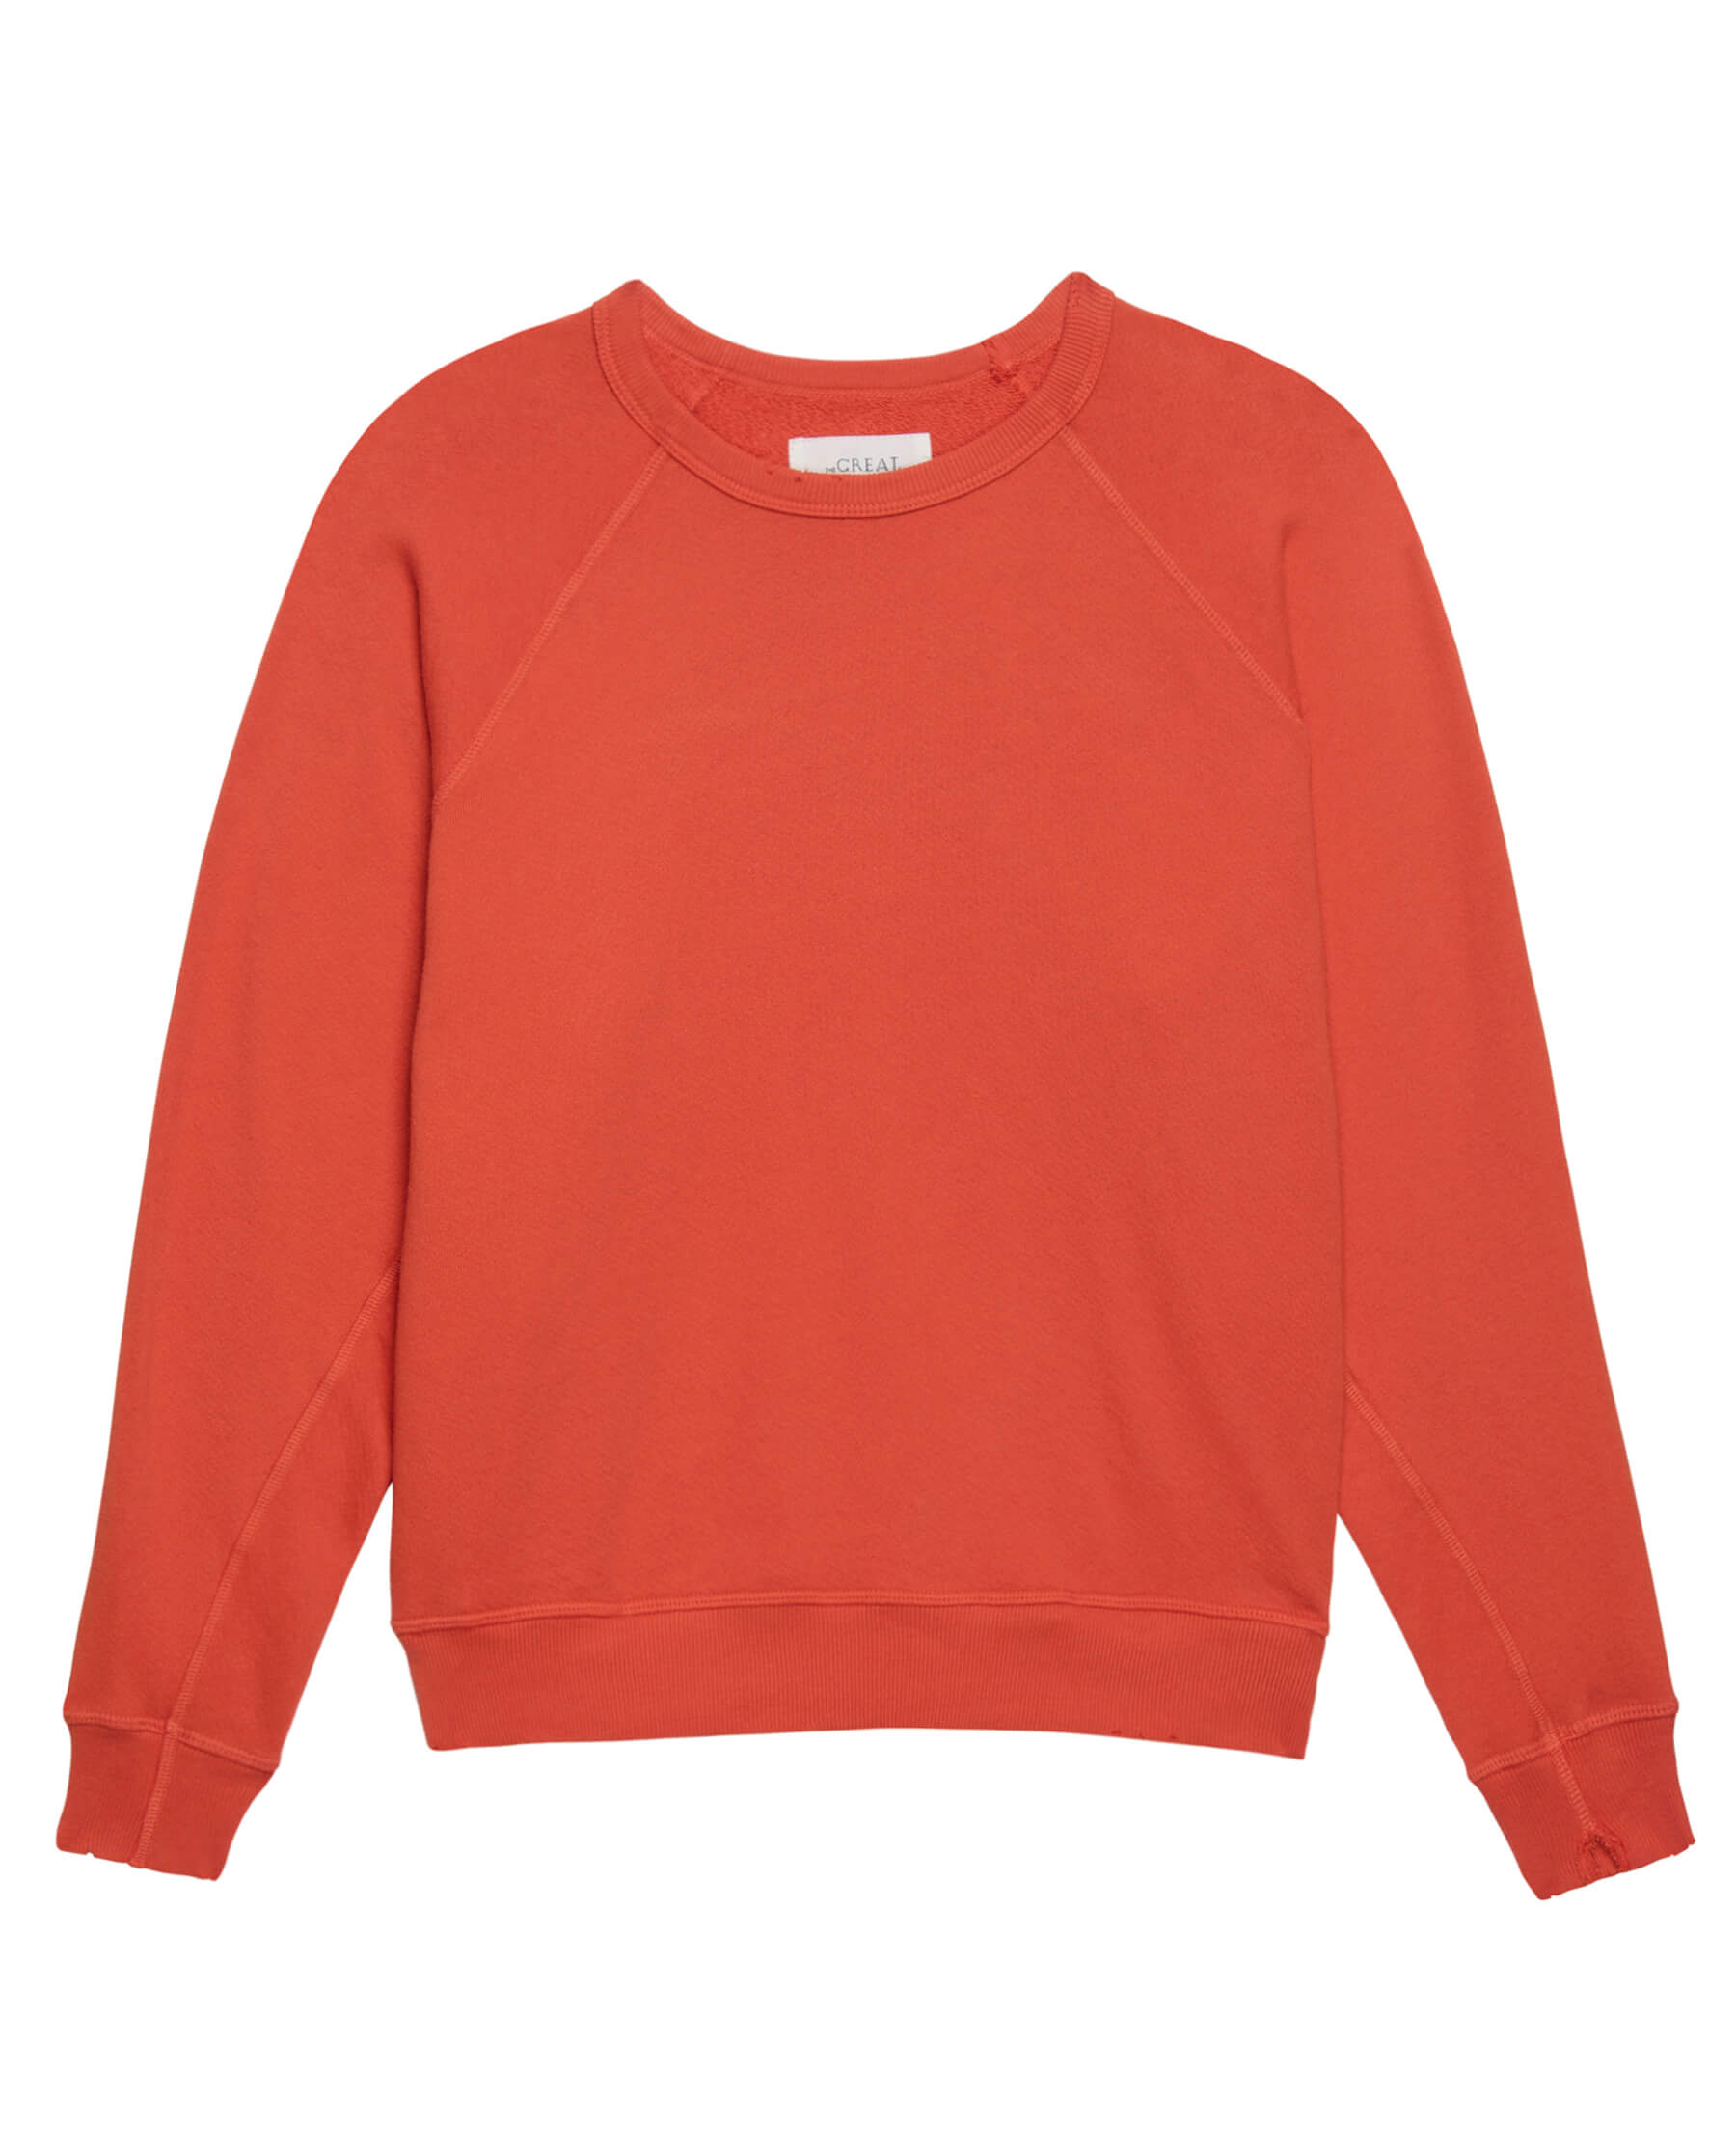 The College Sweatshirt. Solid -- Heirloom Tomato